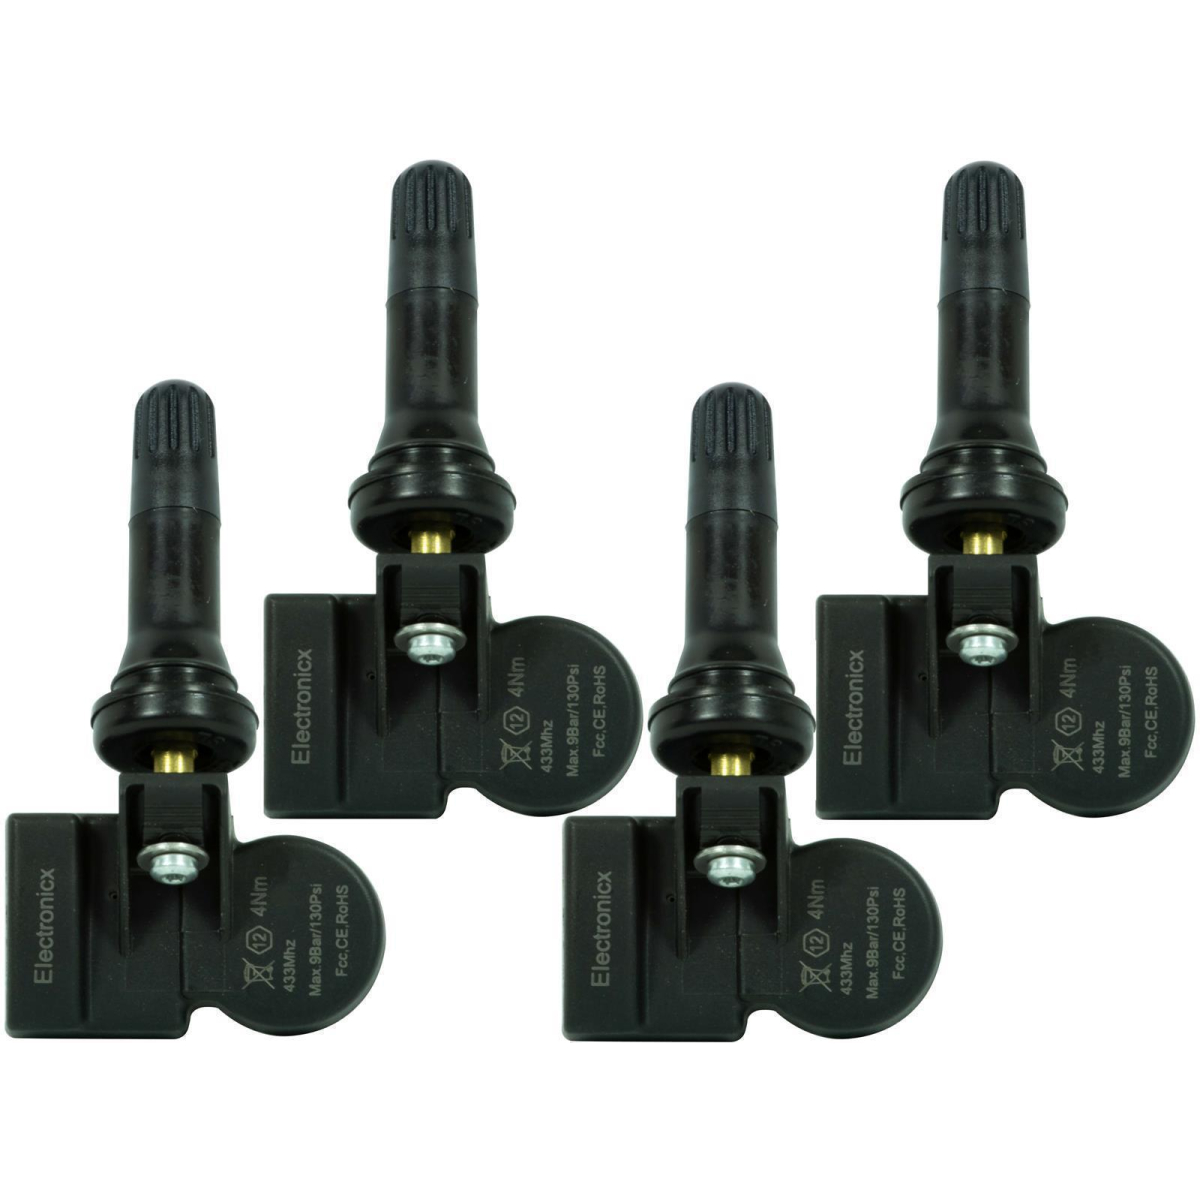 4 tire pressure sensors rdks sensors rubber valve for bmw 6 series e63/e64 08.2003-12.2010